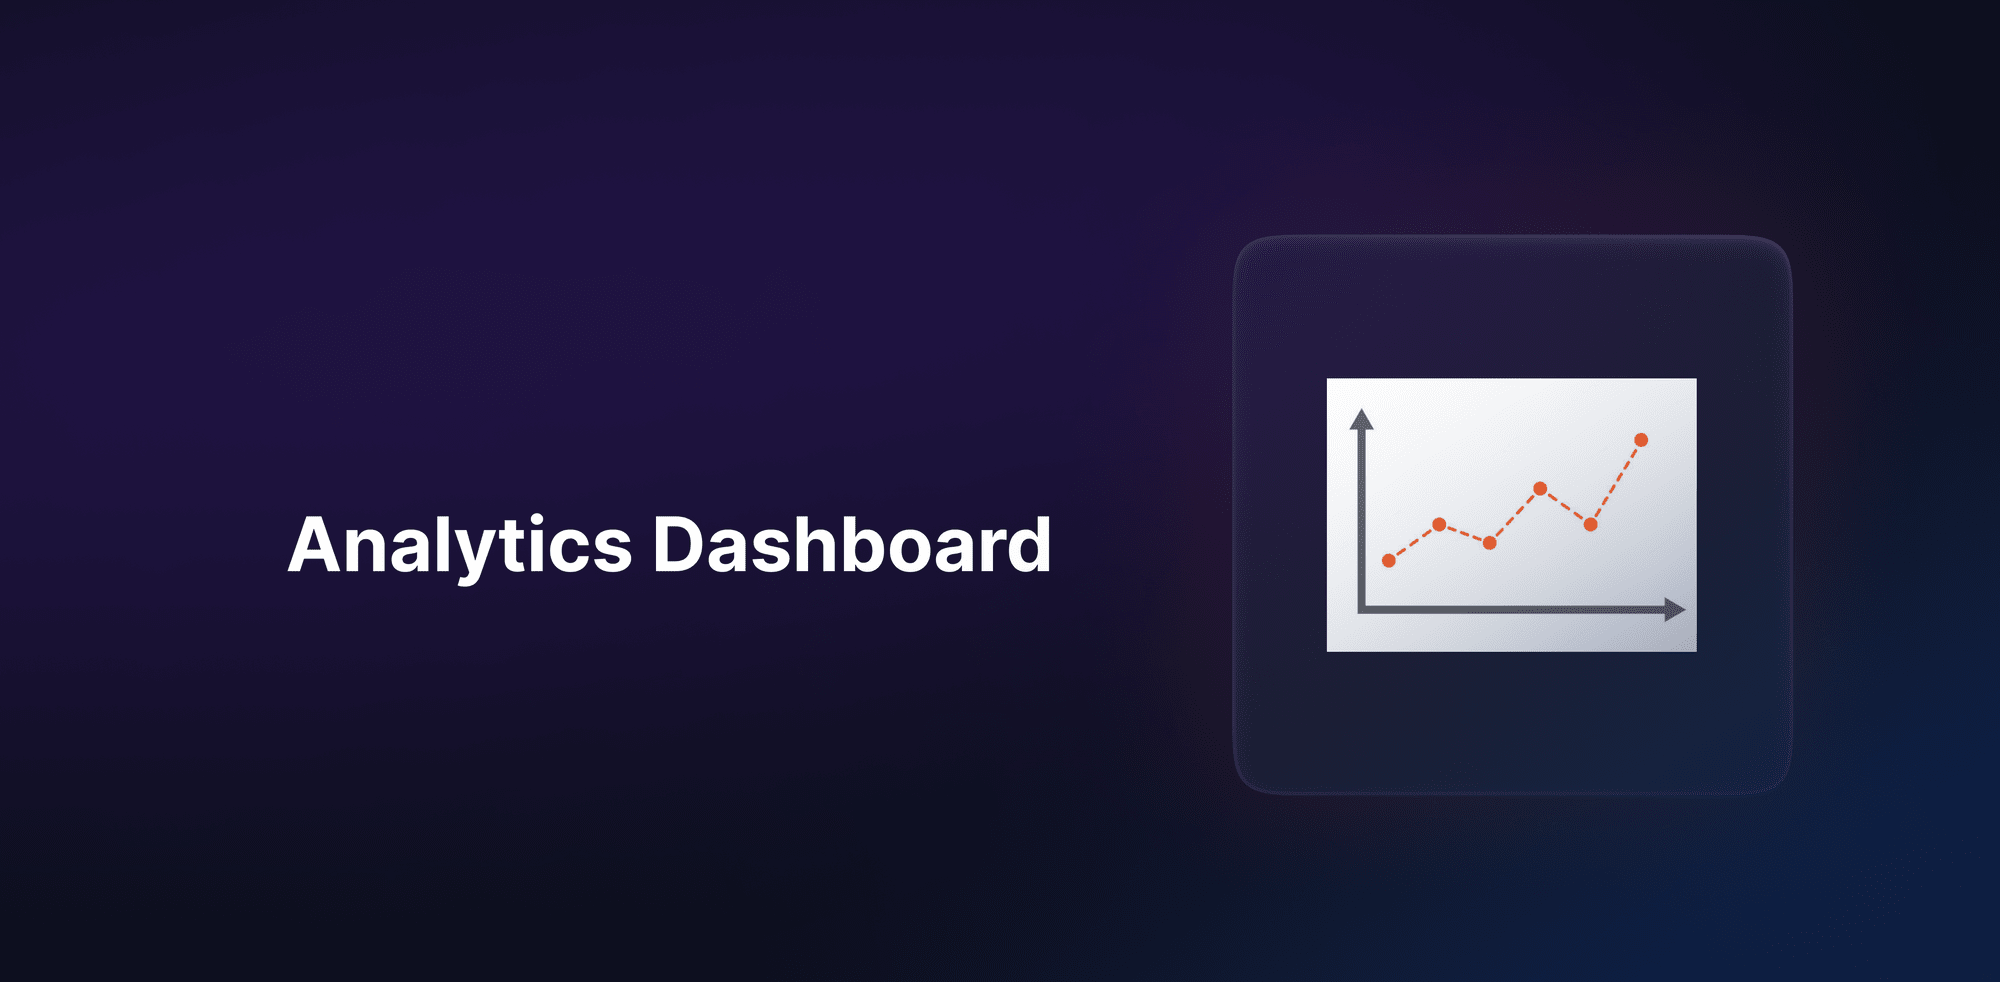 Introducing Analytics Dashboard